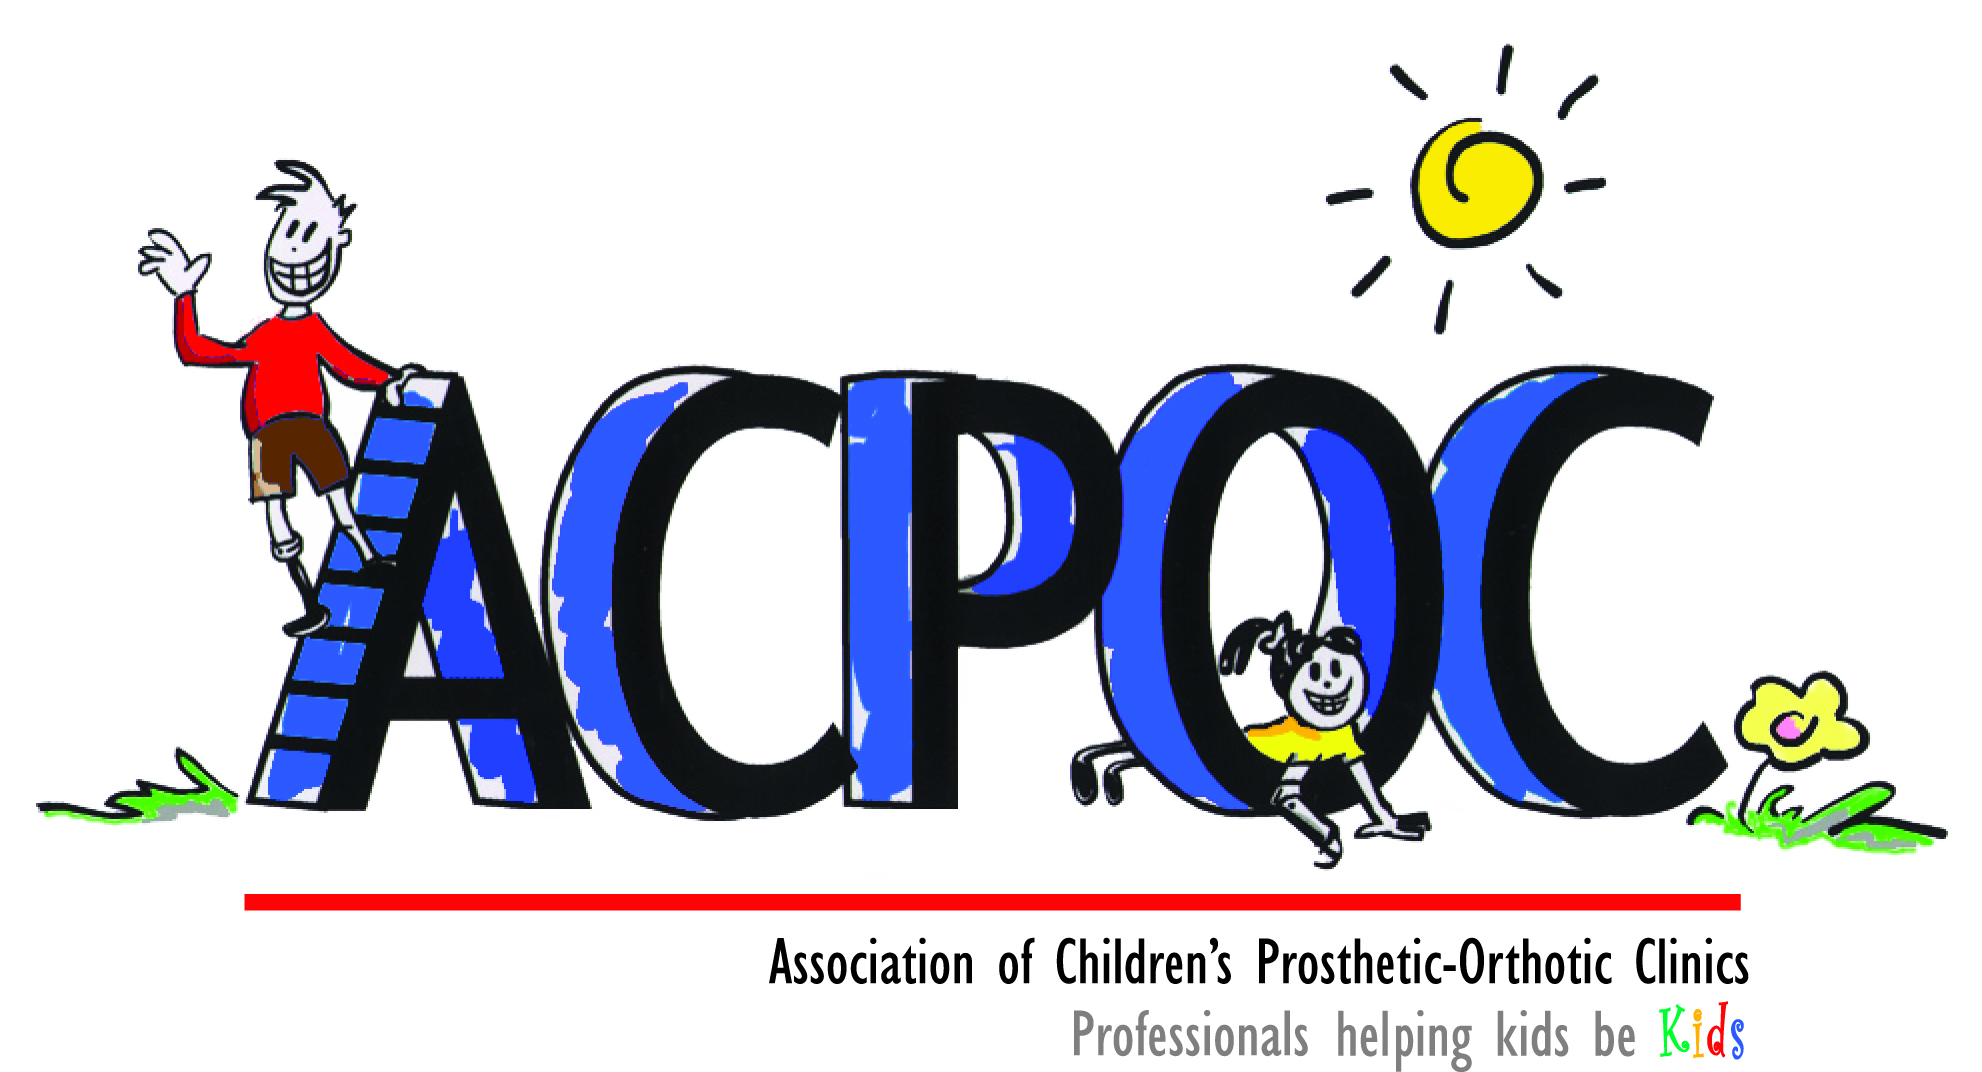 Association of Children's Prosthetic-Orthotic Clinics